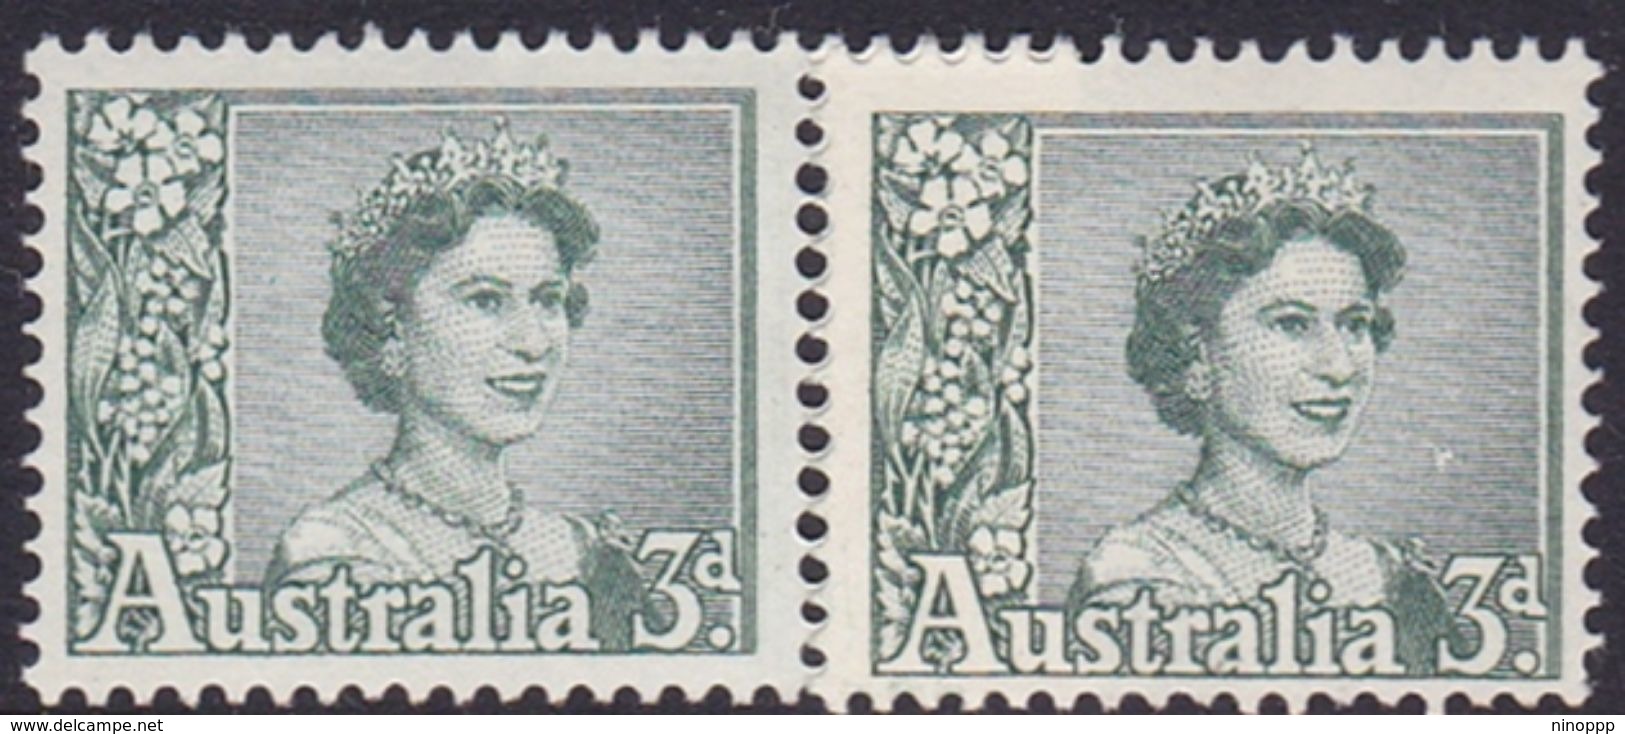 Australia ASC 343 1959 Queen Elizabeth II 3d Blue-green, Joint Coil Pair, Mint Never Hinged - Proofs & Reprints